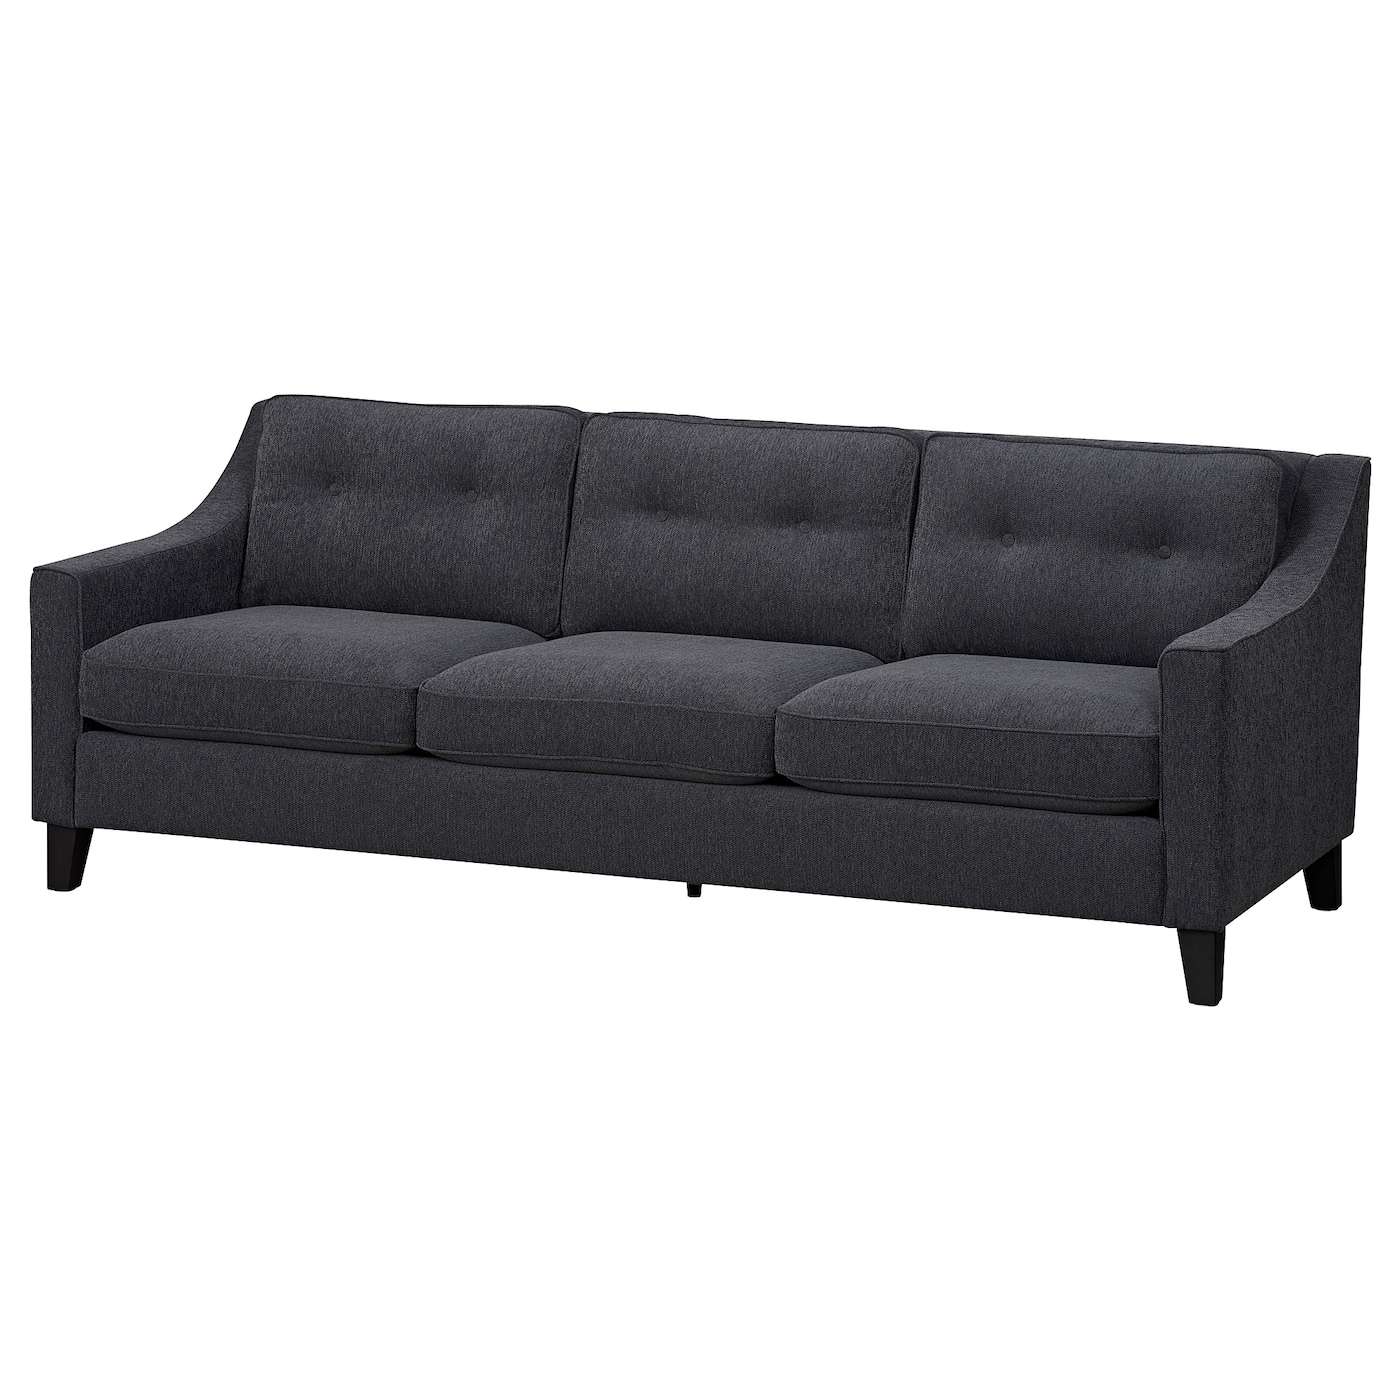 3-местный диван - IKEA FRÖSLÖV/FROSLOV/ФРЕСЛЕВ ИКЕА, 84х92х227 см, черный